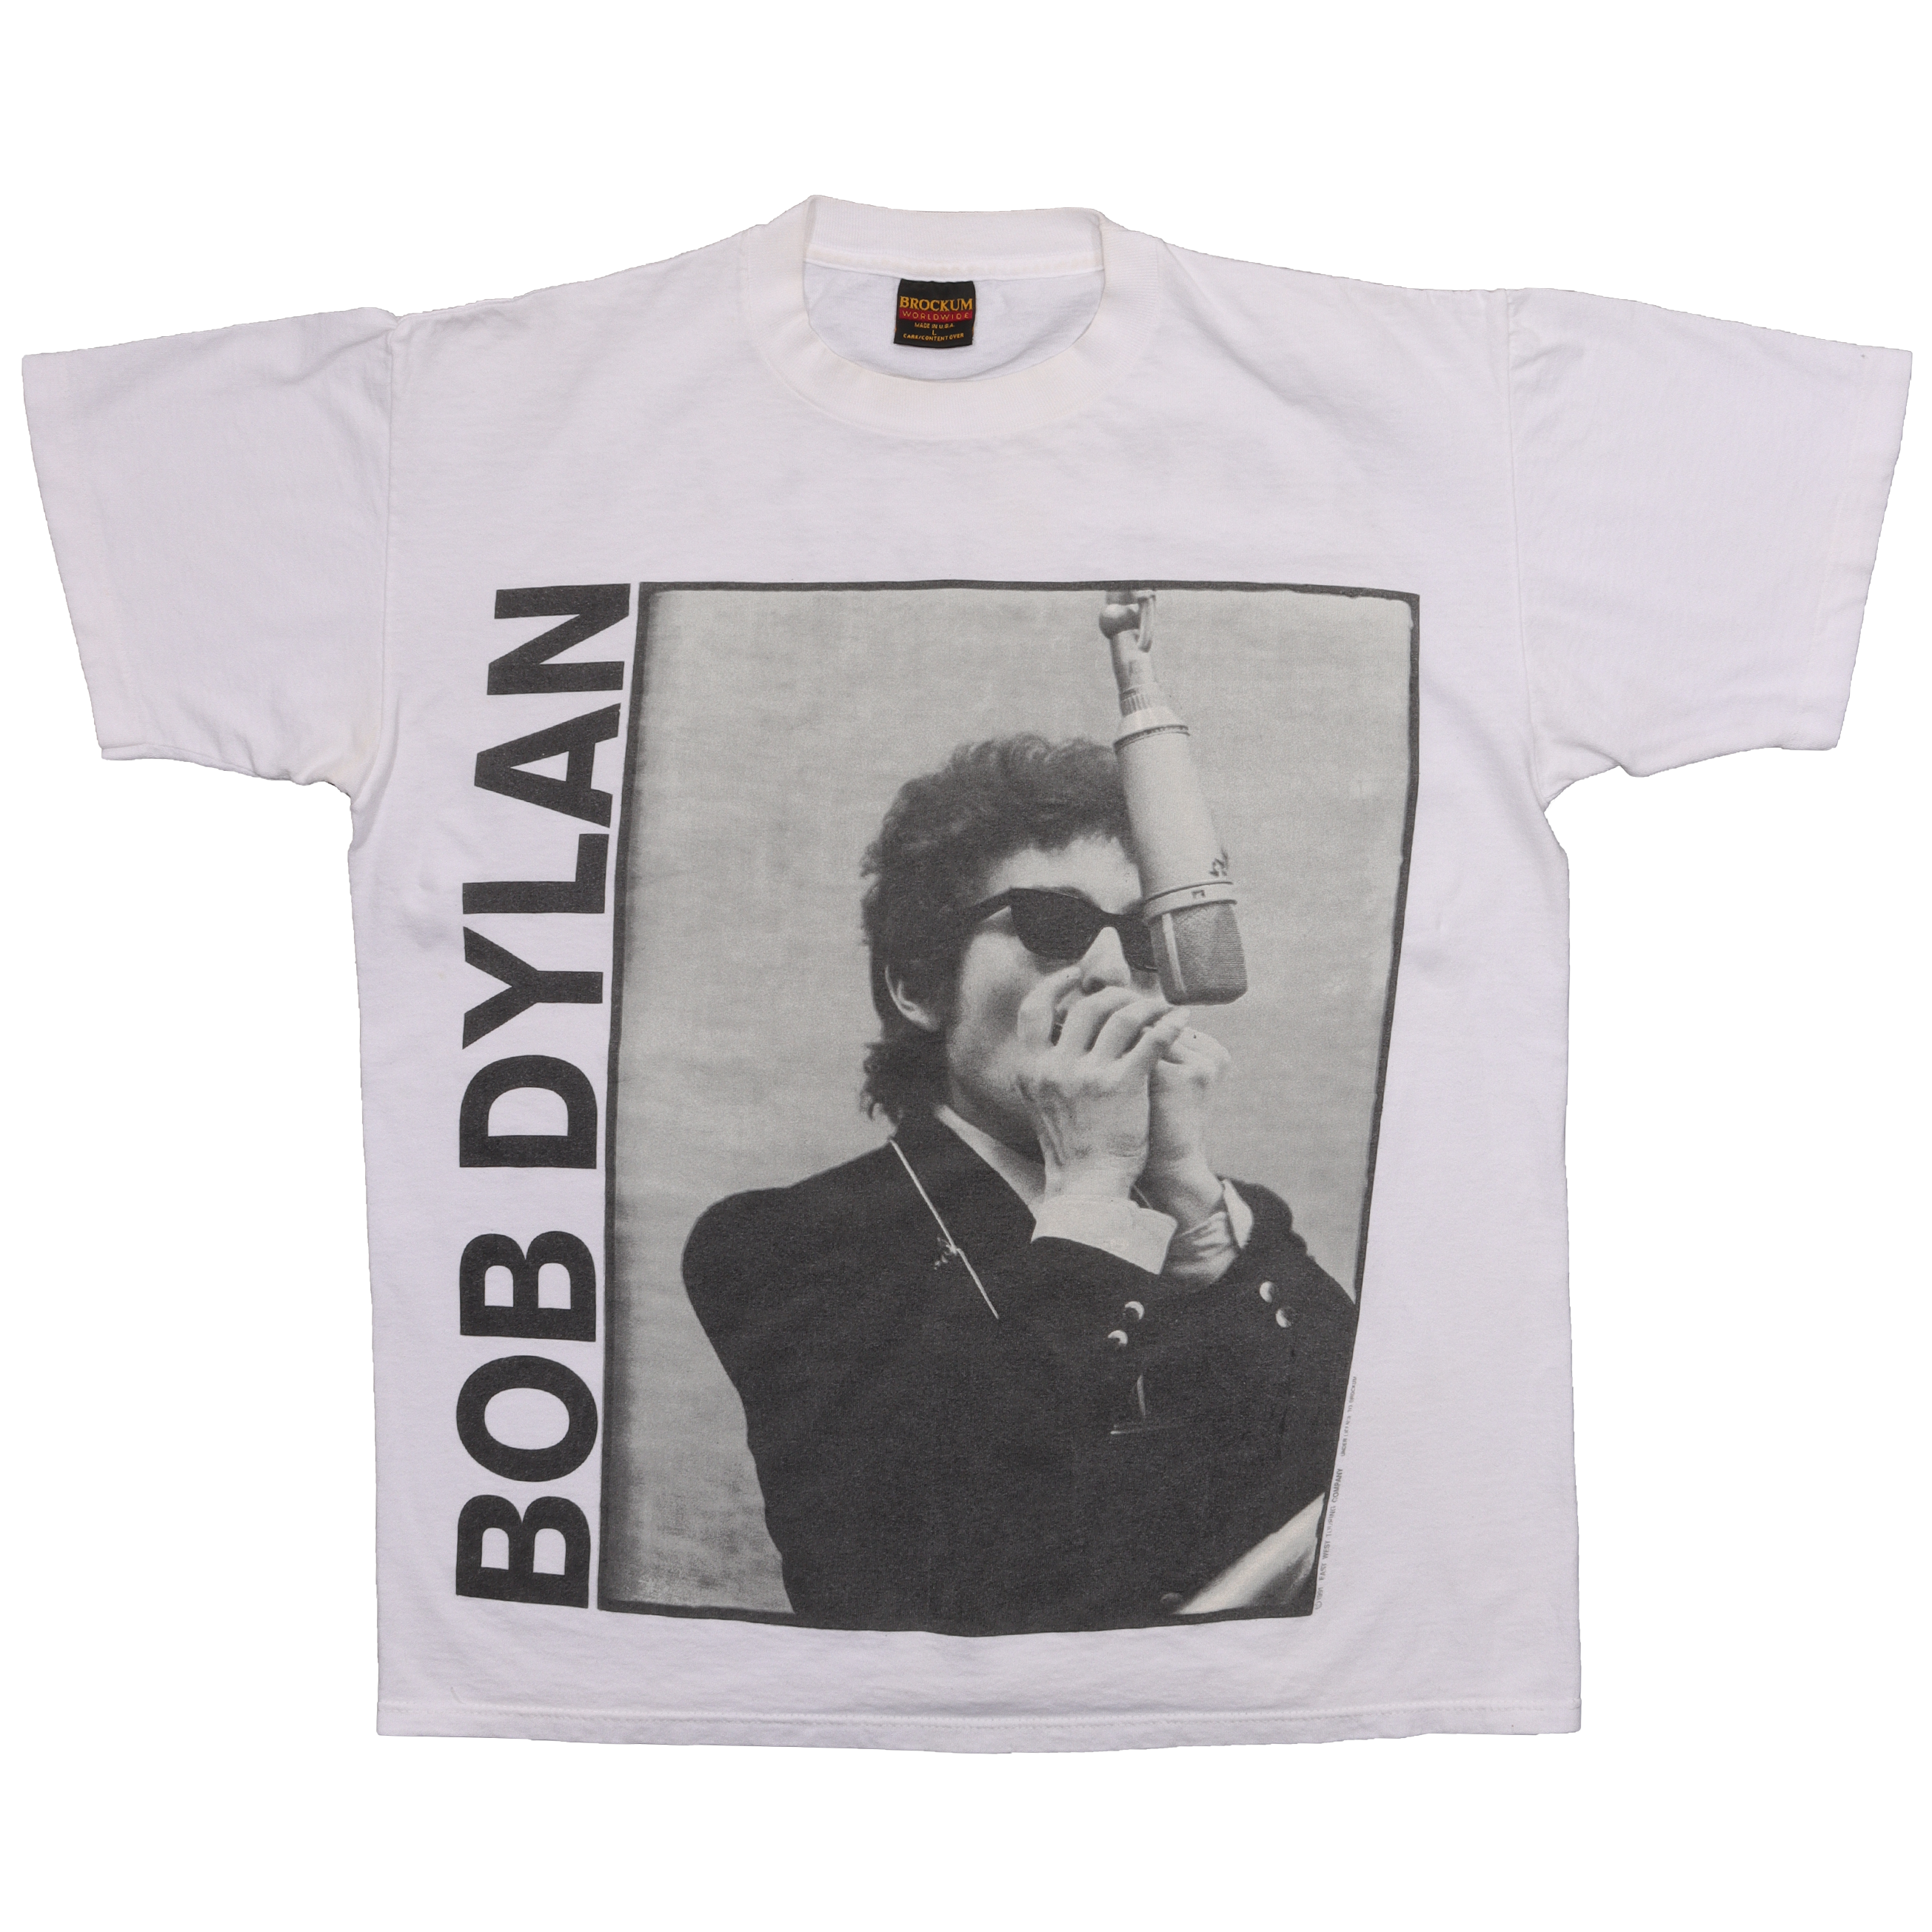 1994 BOB DYLAN Tour T-Shirt